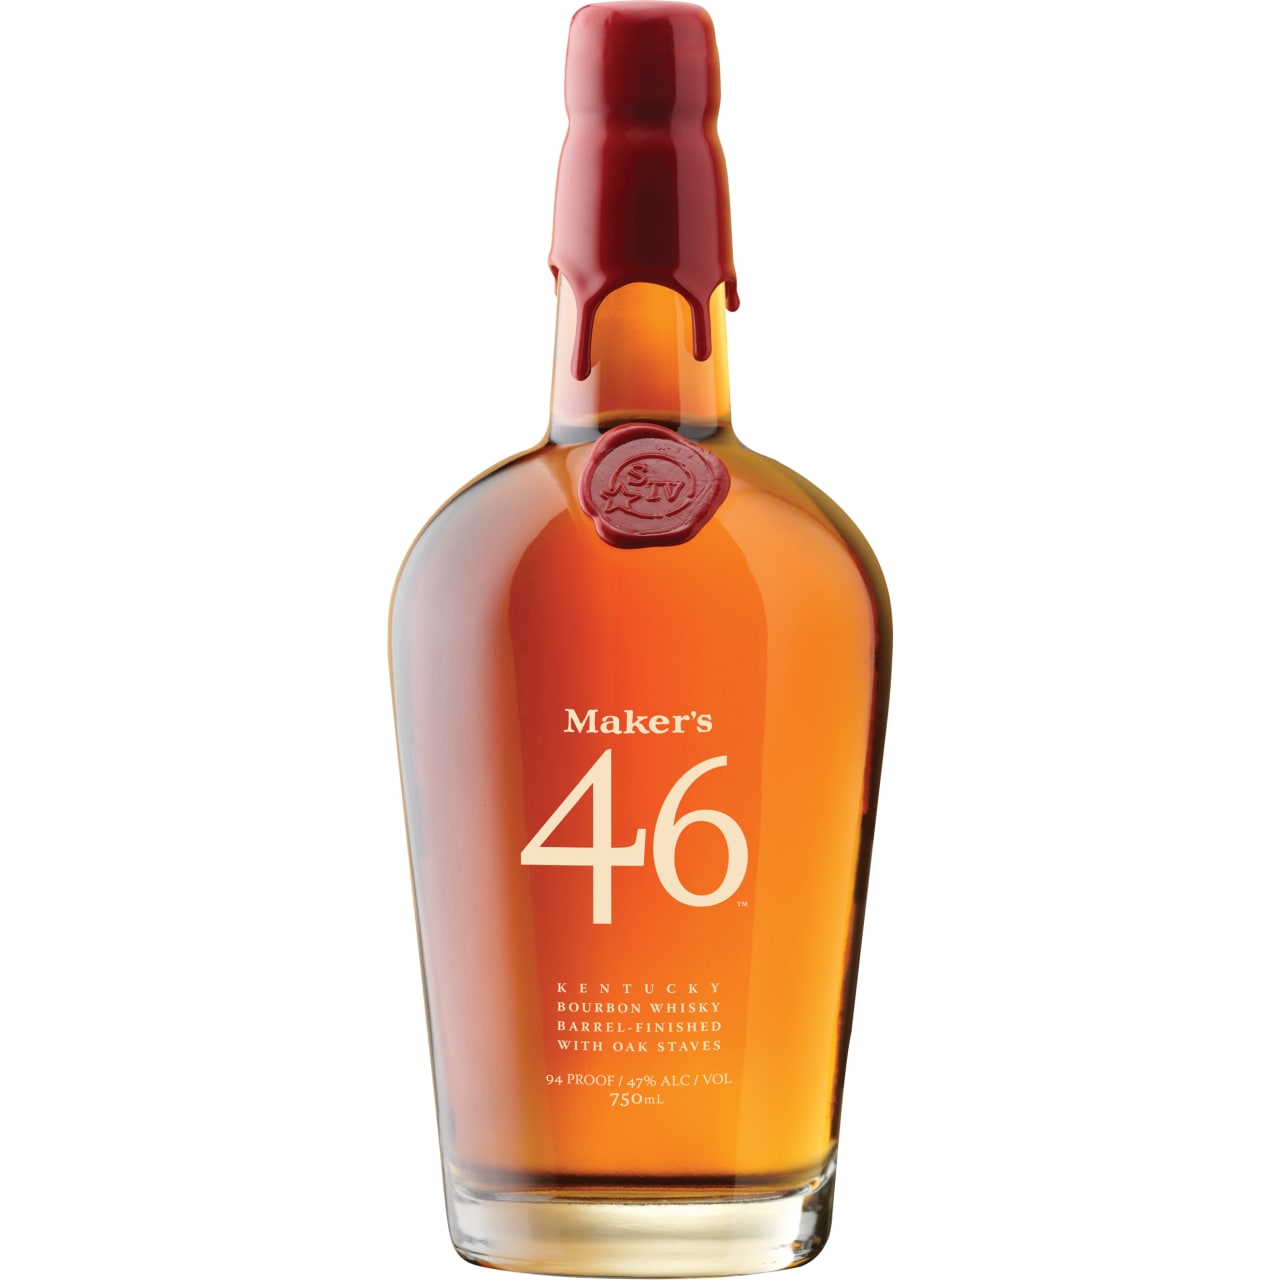 Product Image - Maker's Mark 46 Kentucky Bourbon